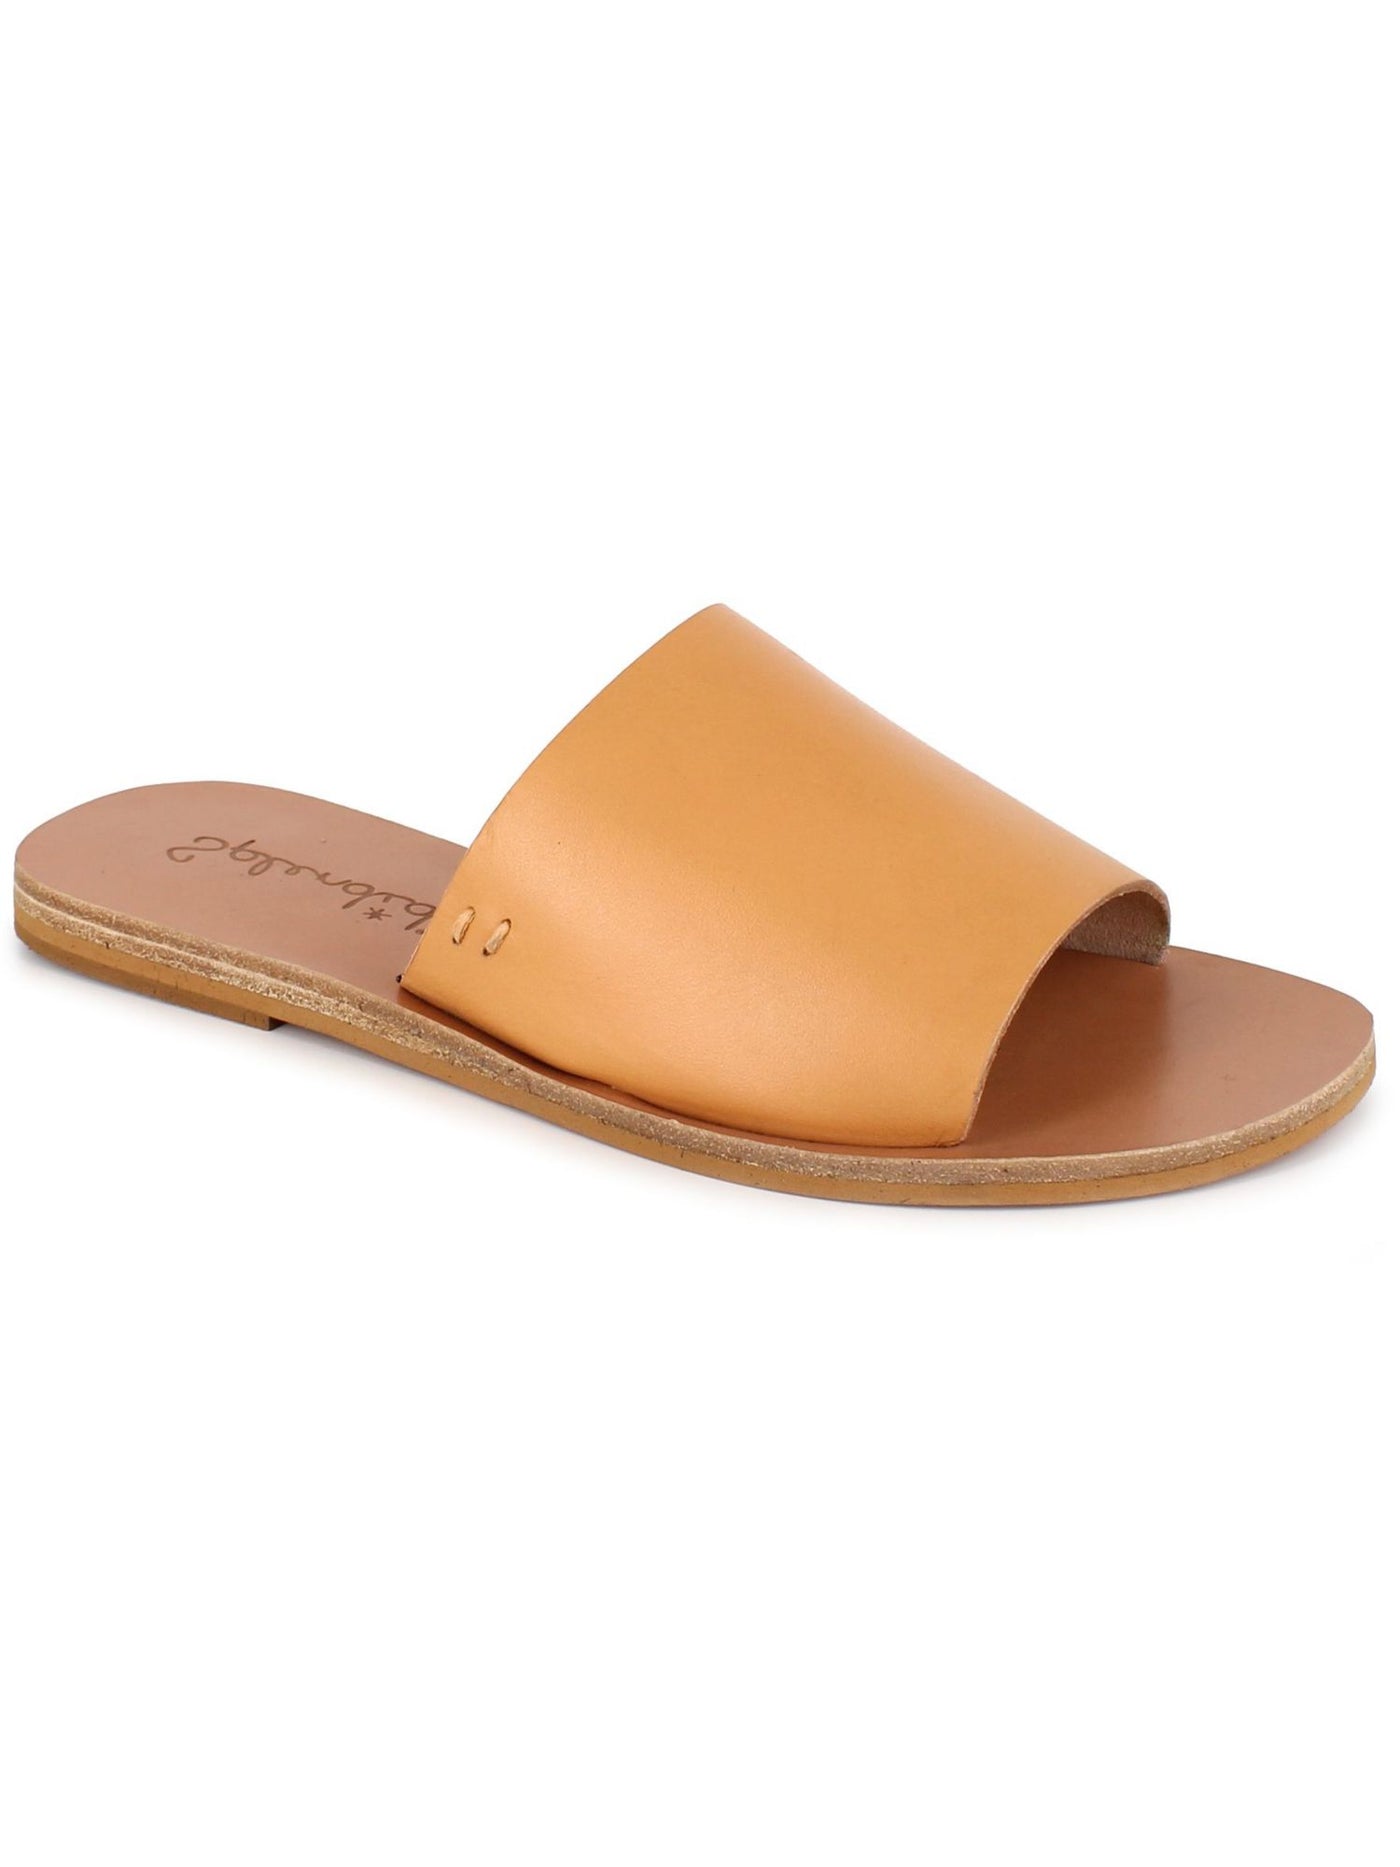 SPLENDID Womens Beige Comfort Thea Round Toe Slip On Leather Slide Sandals Shoes 11 B